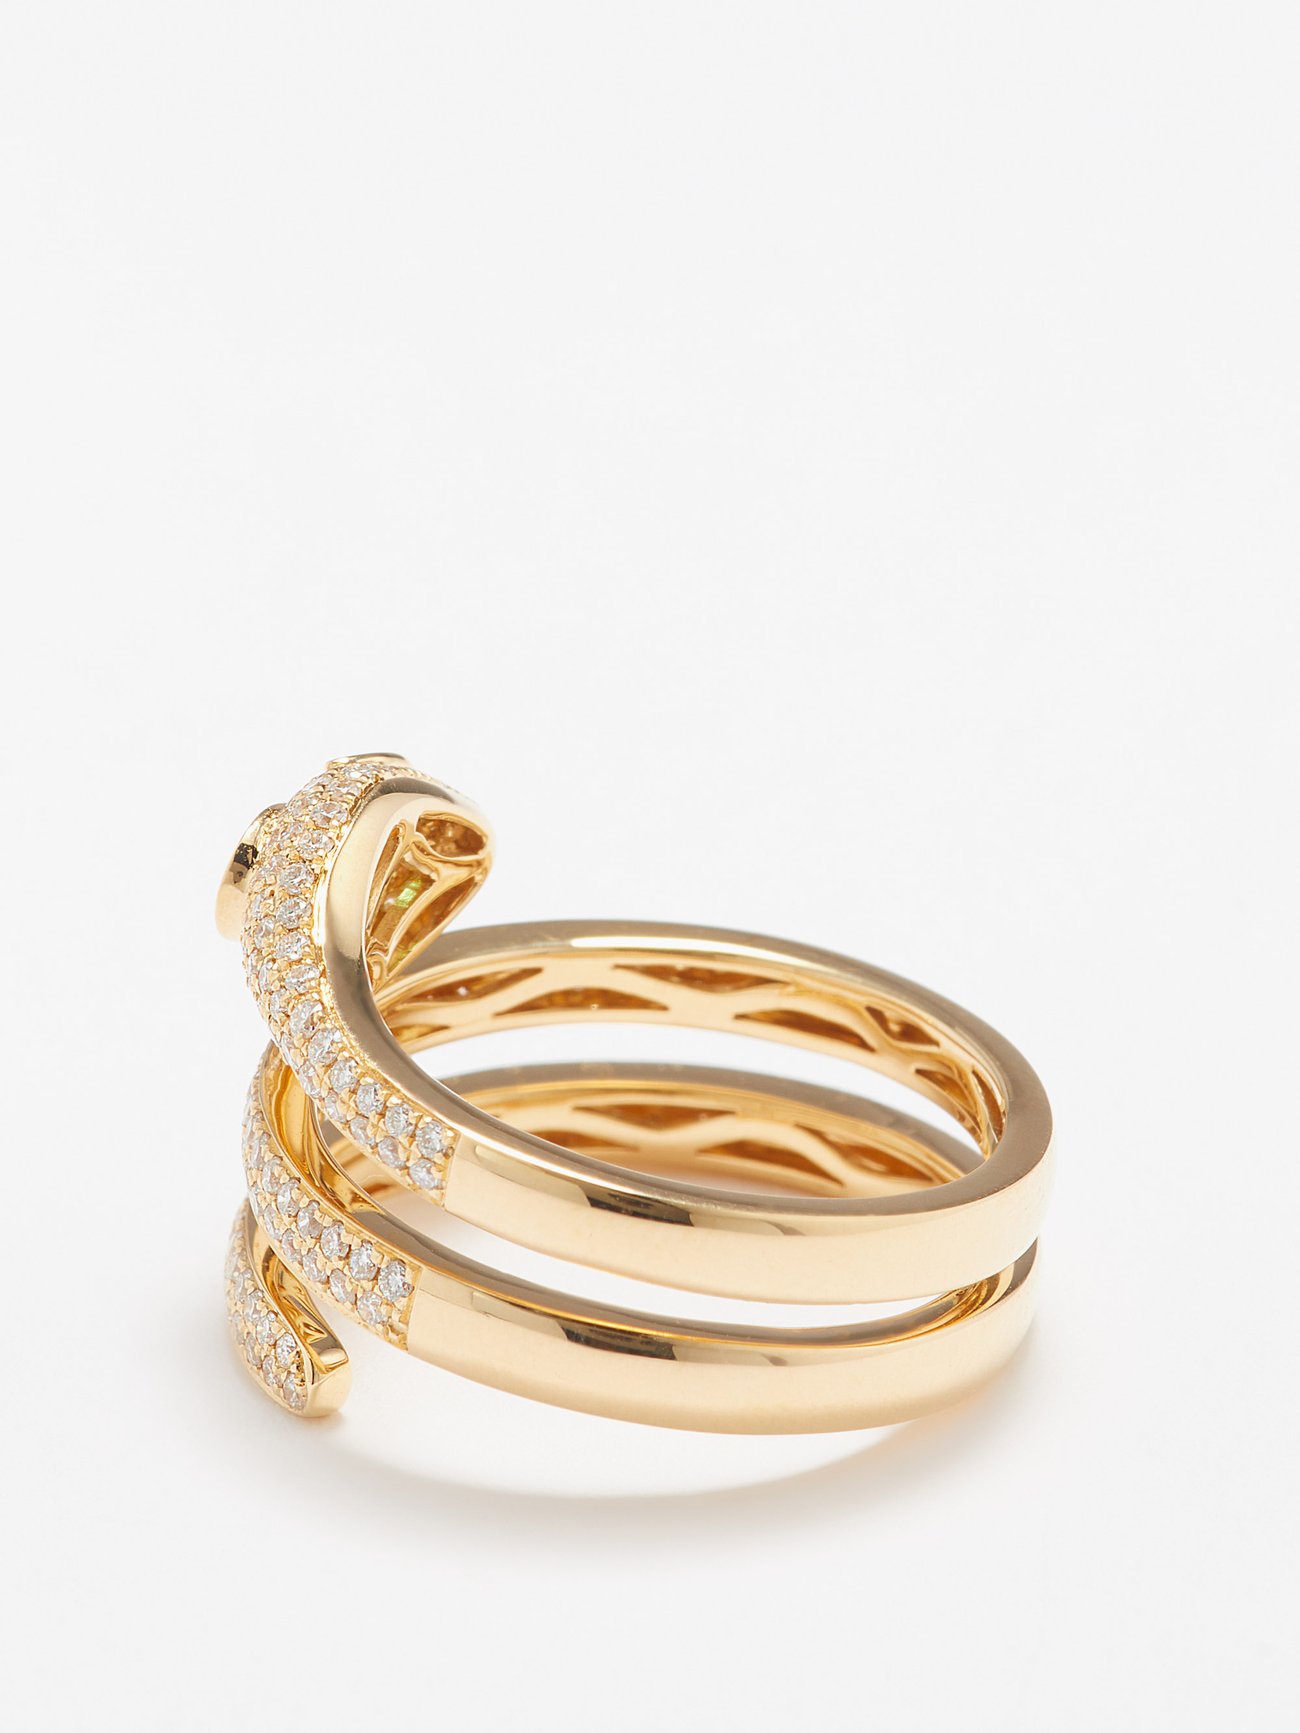 Coil ring emerald Snake diamond, | MATCHES & Gold Ko Anita 18kt gold UK |